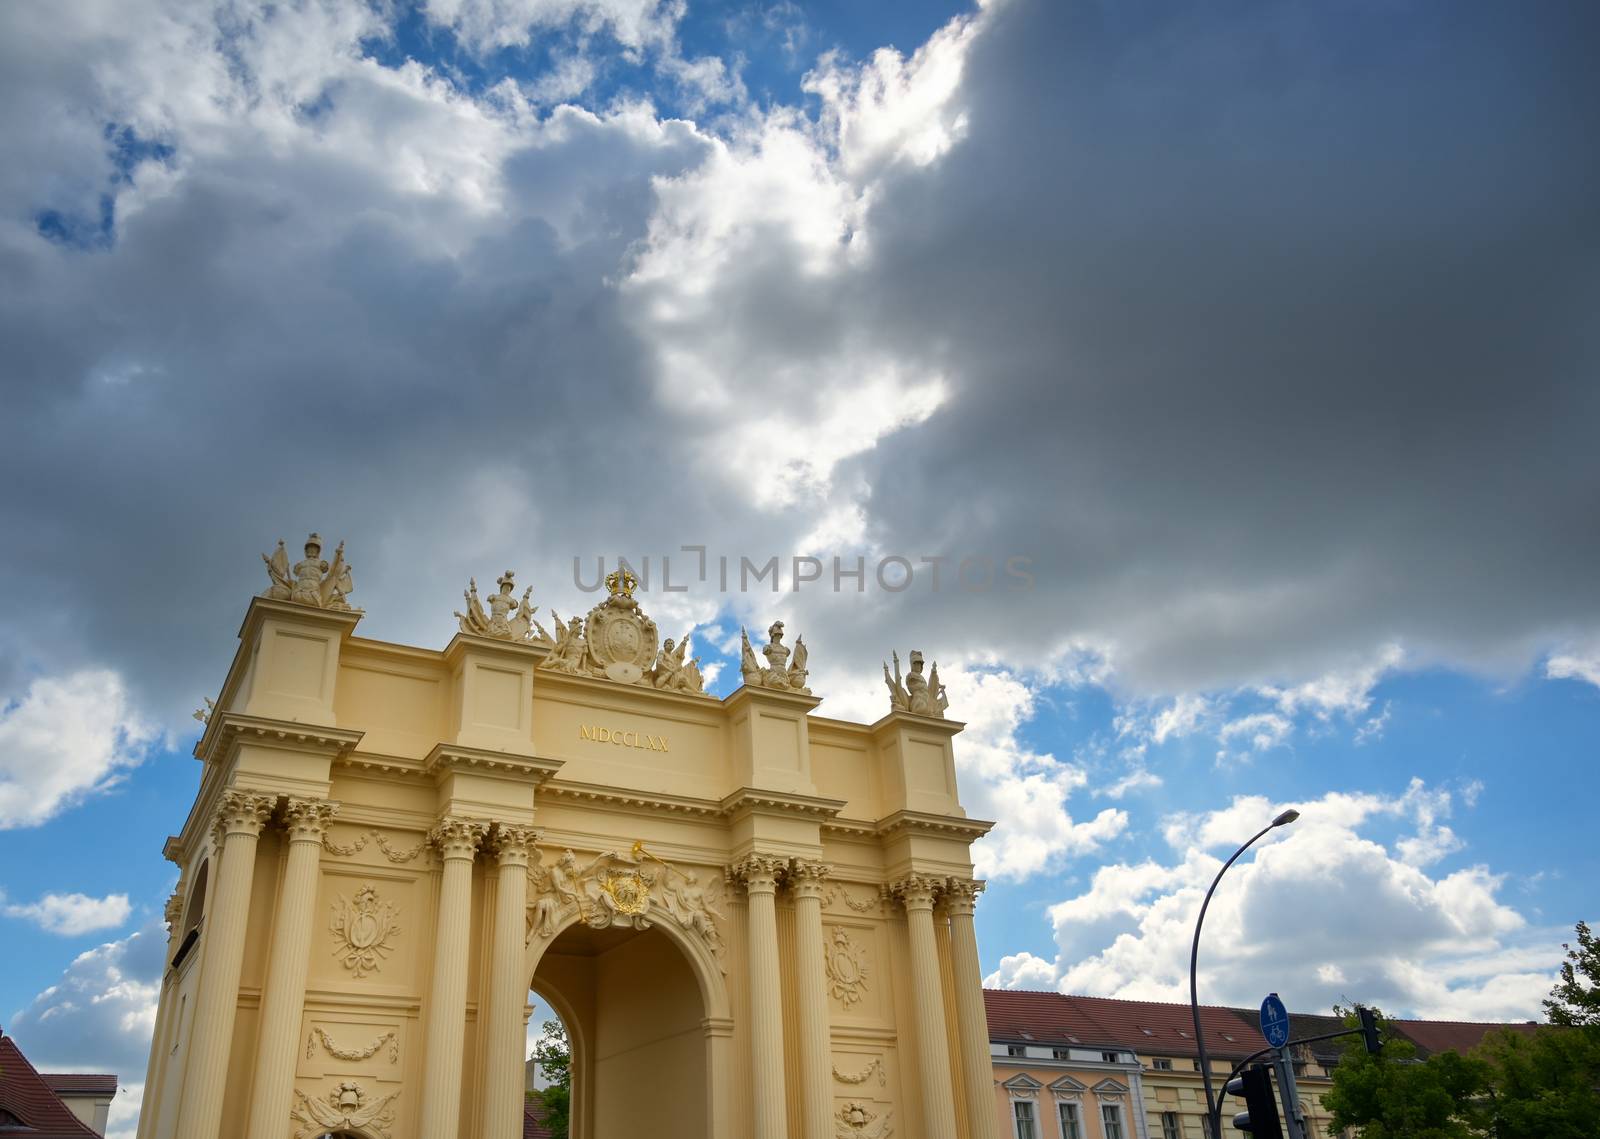 Brandenburg Gate in Potsdam, Germany by jbyard22